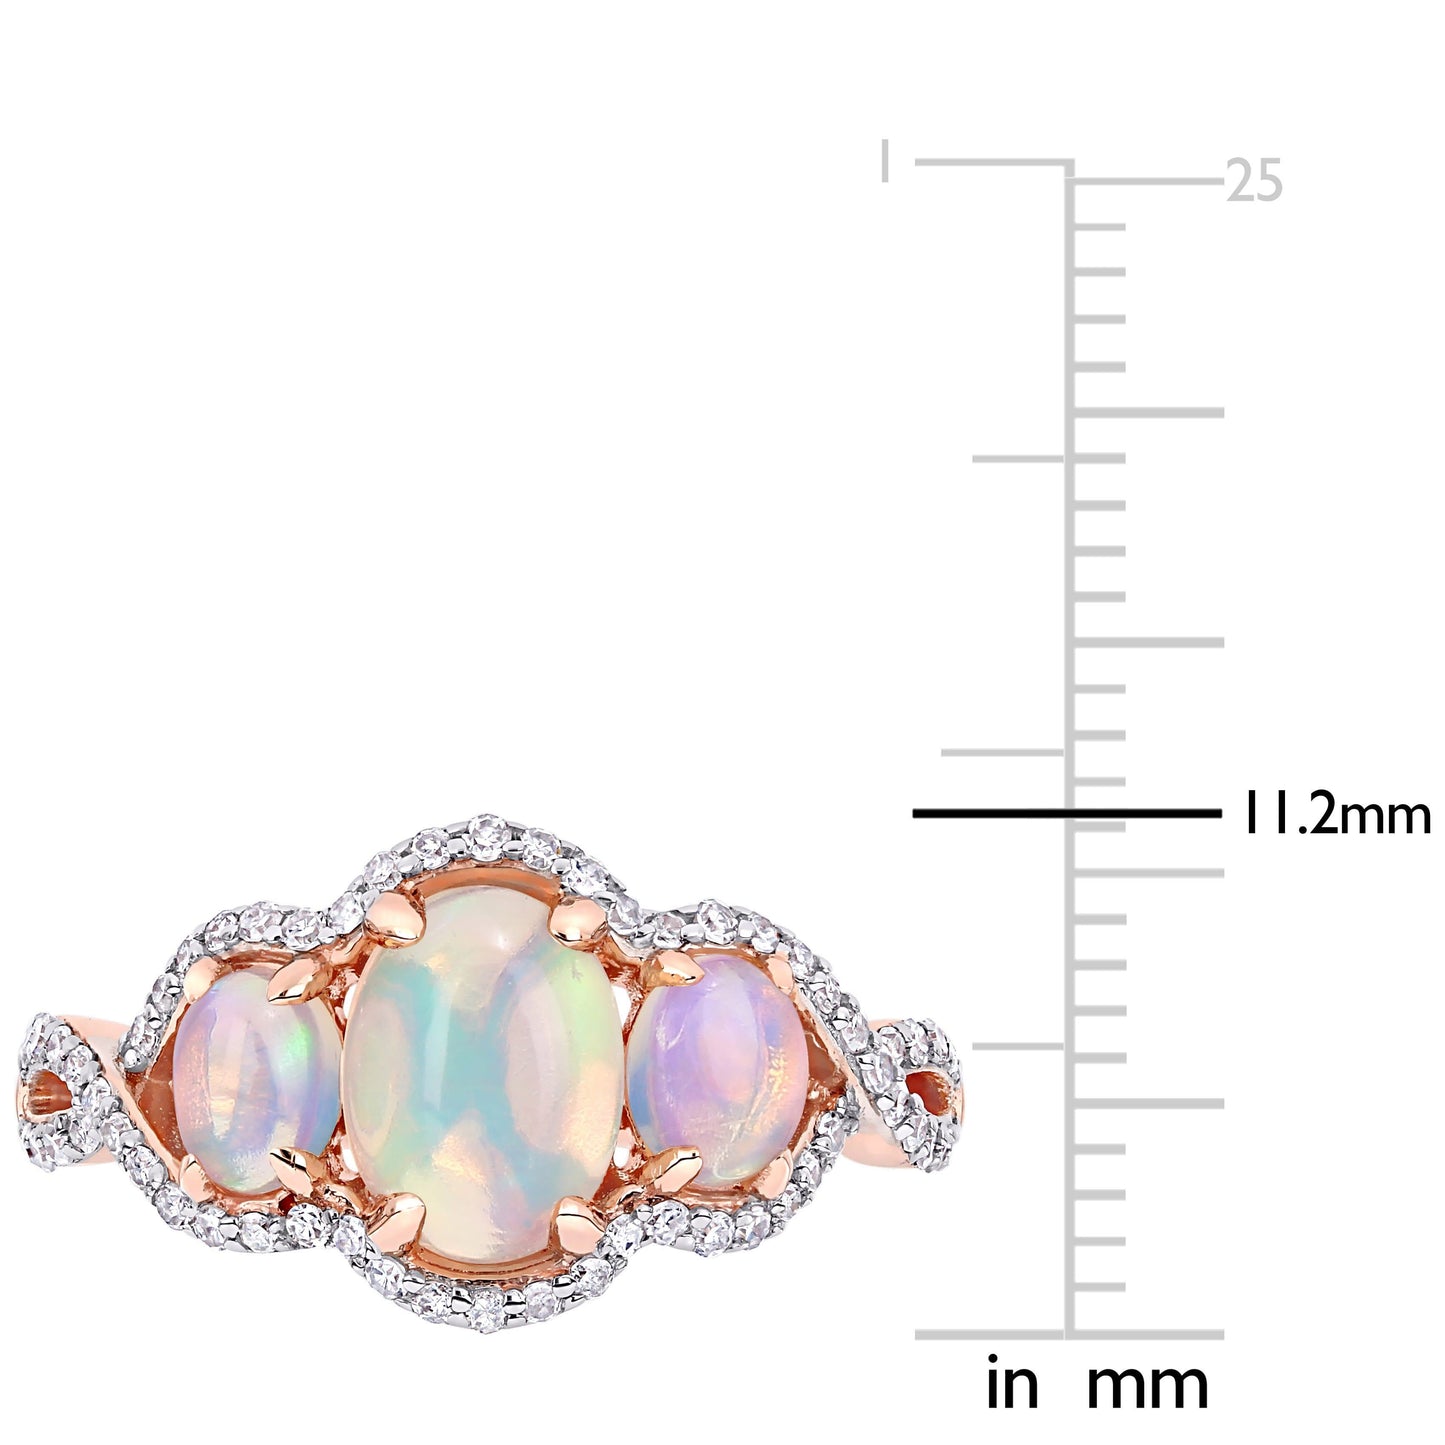 3-Stone Ethiopian Opal & Diamond Ring in 10k Rose Gold